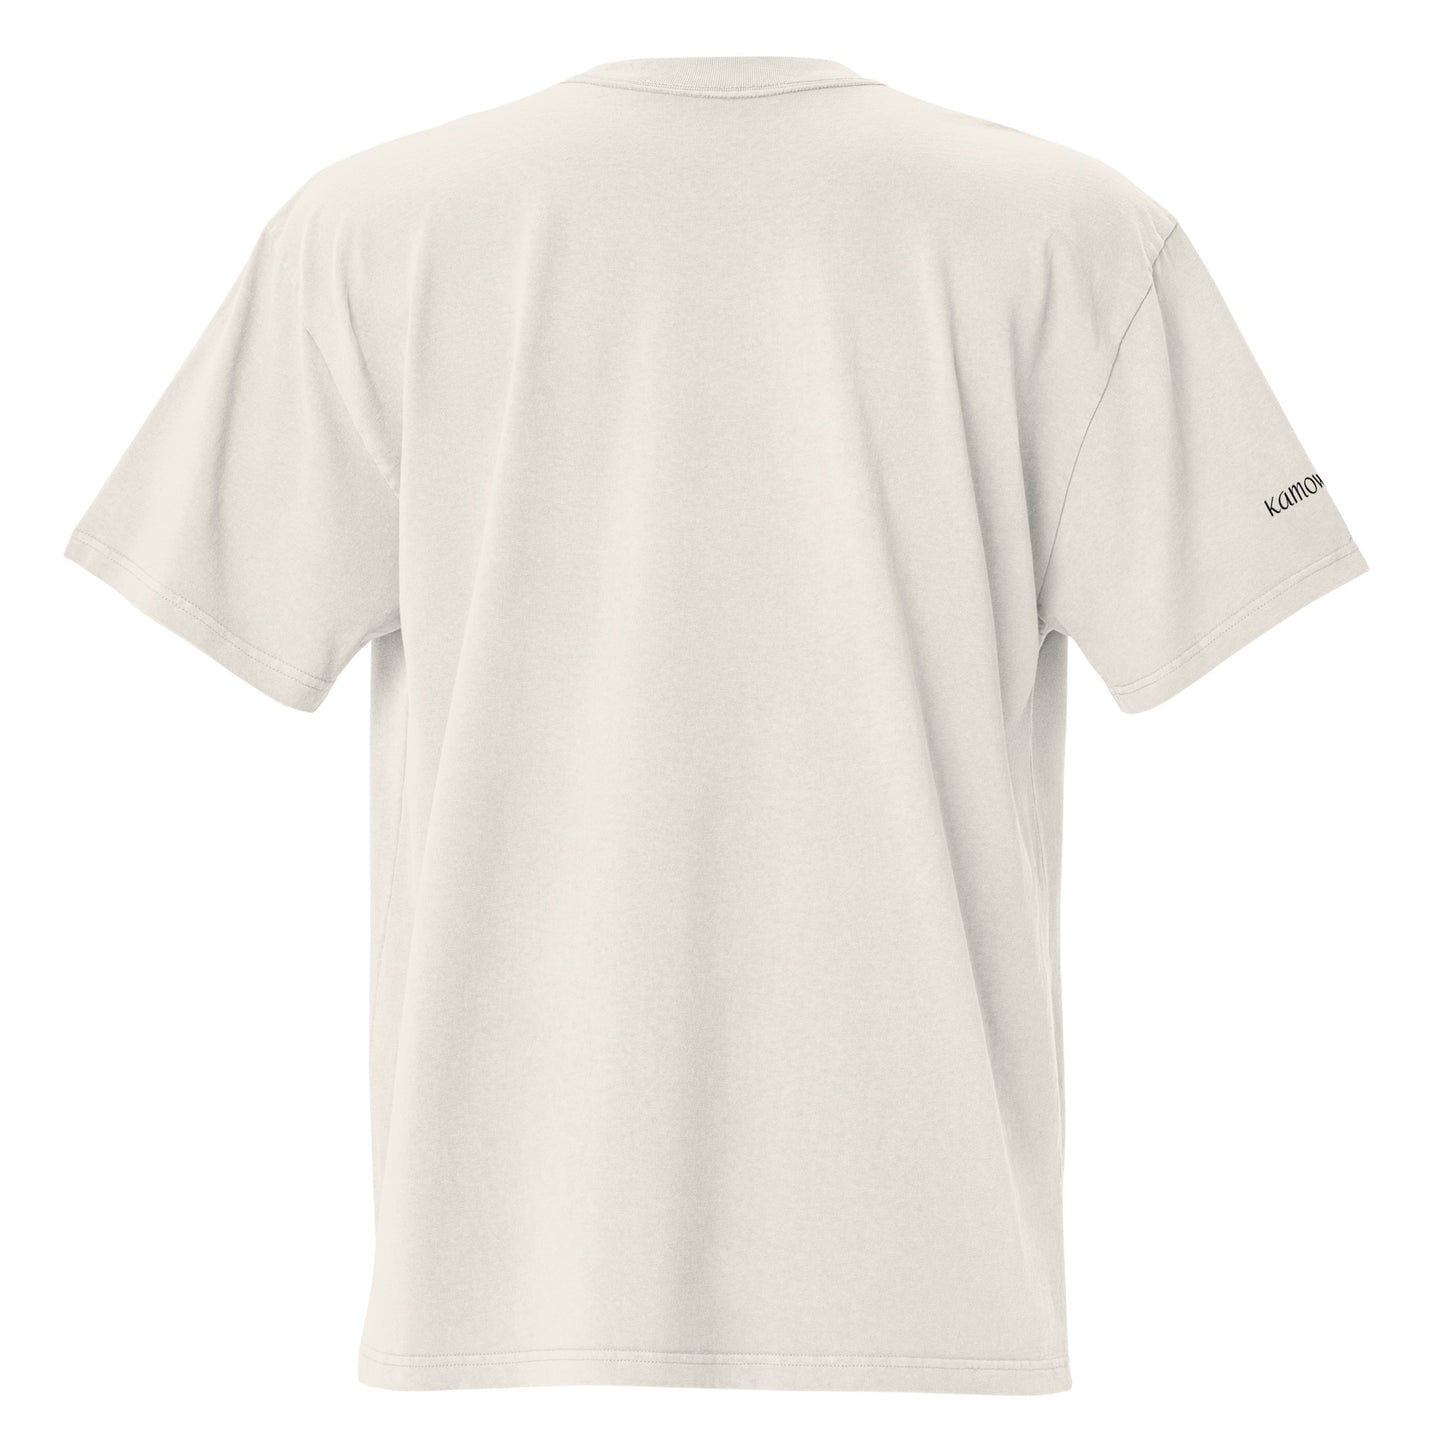 Abstract - Camiseta oversize con efecto desgastado